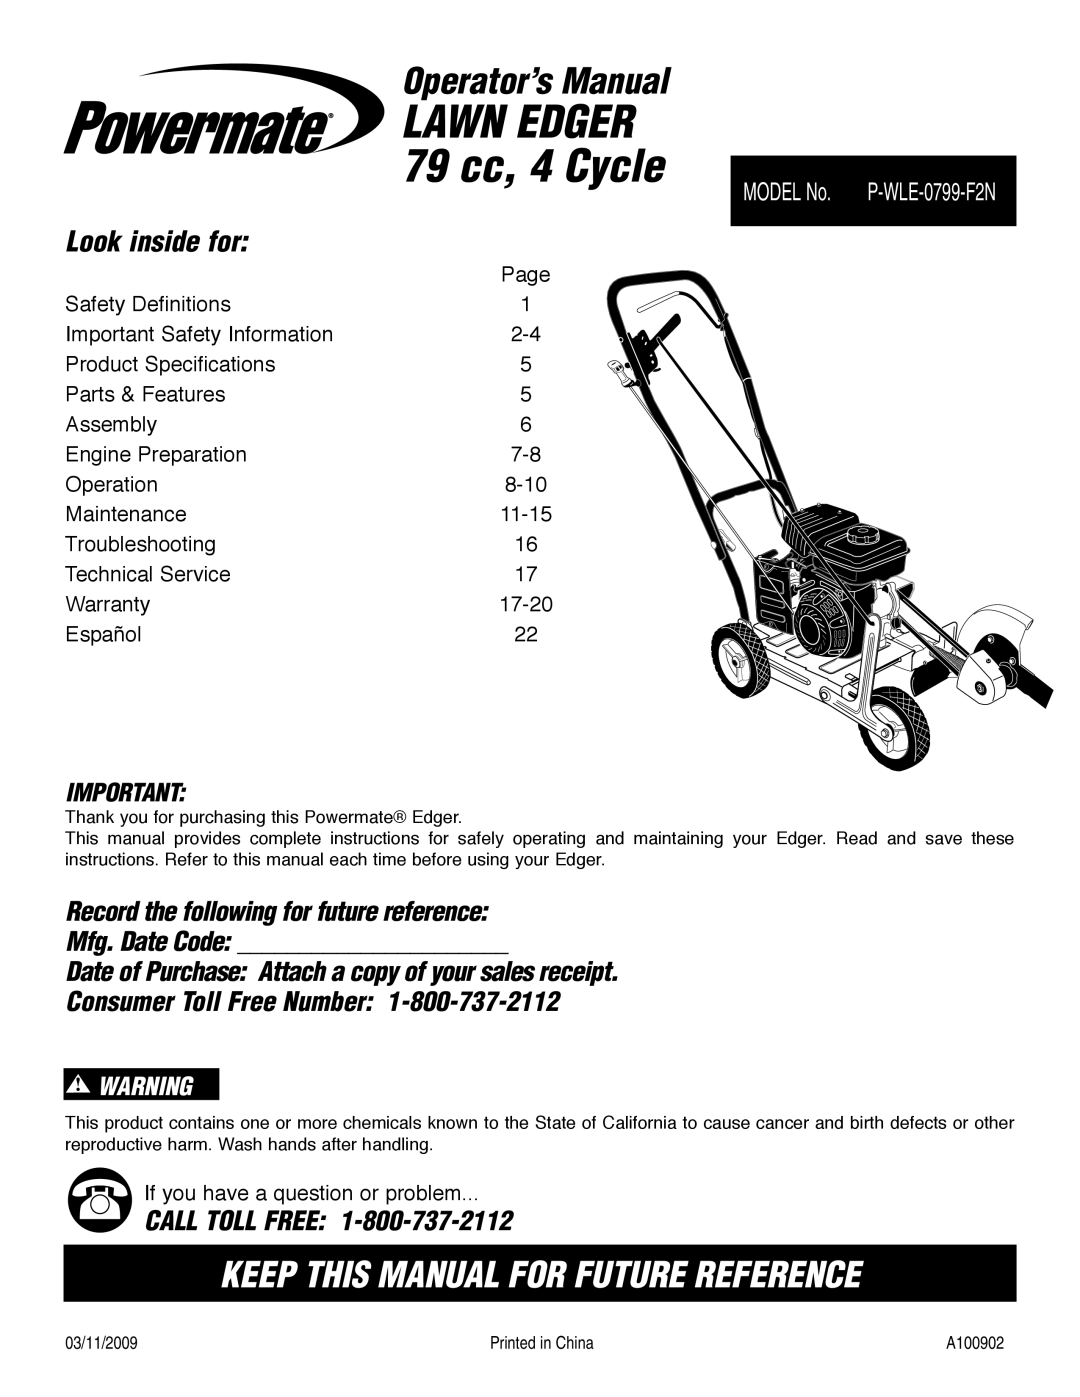 Powermate P-WLE-0799-F2N specifications Lawn Edger, Operator’s Manual 